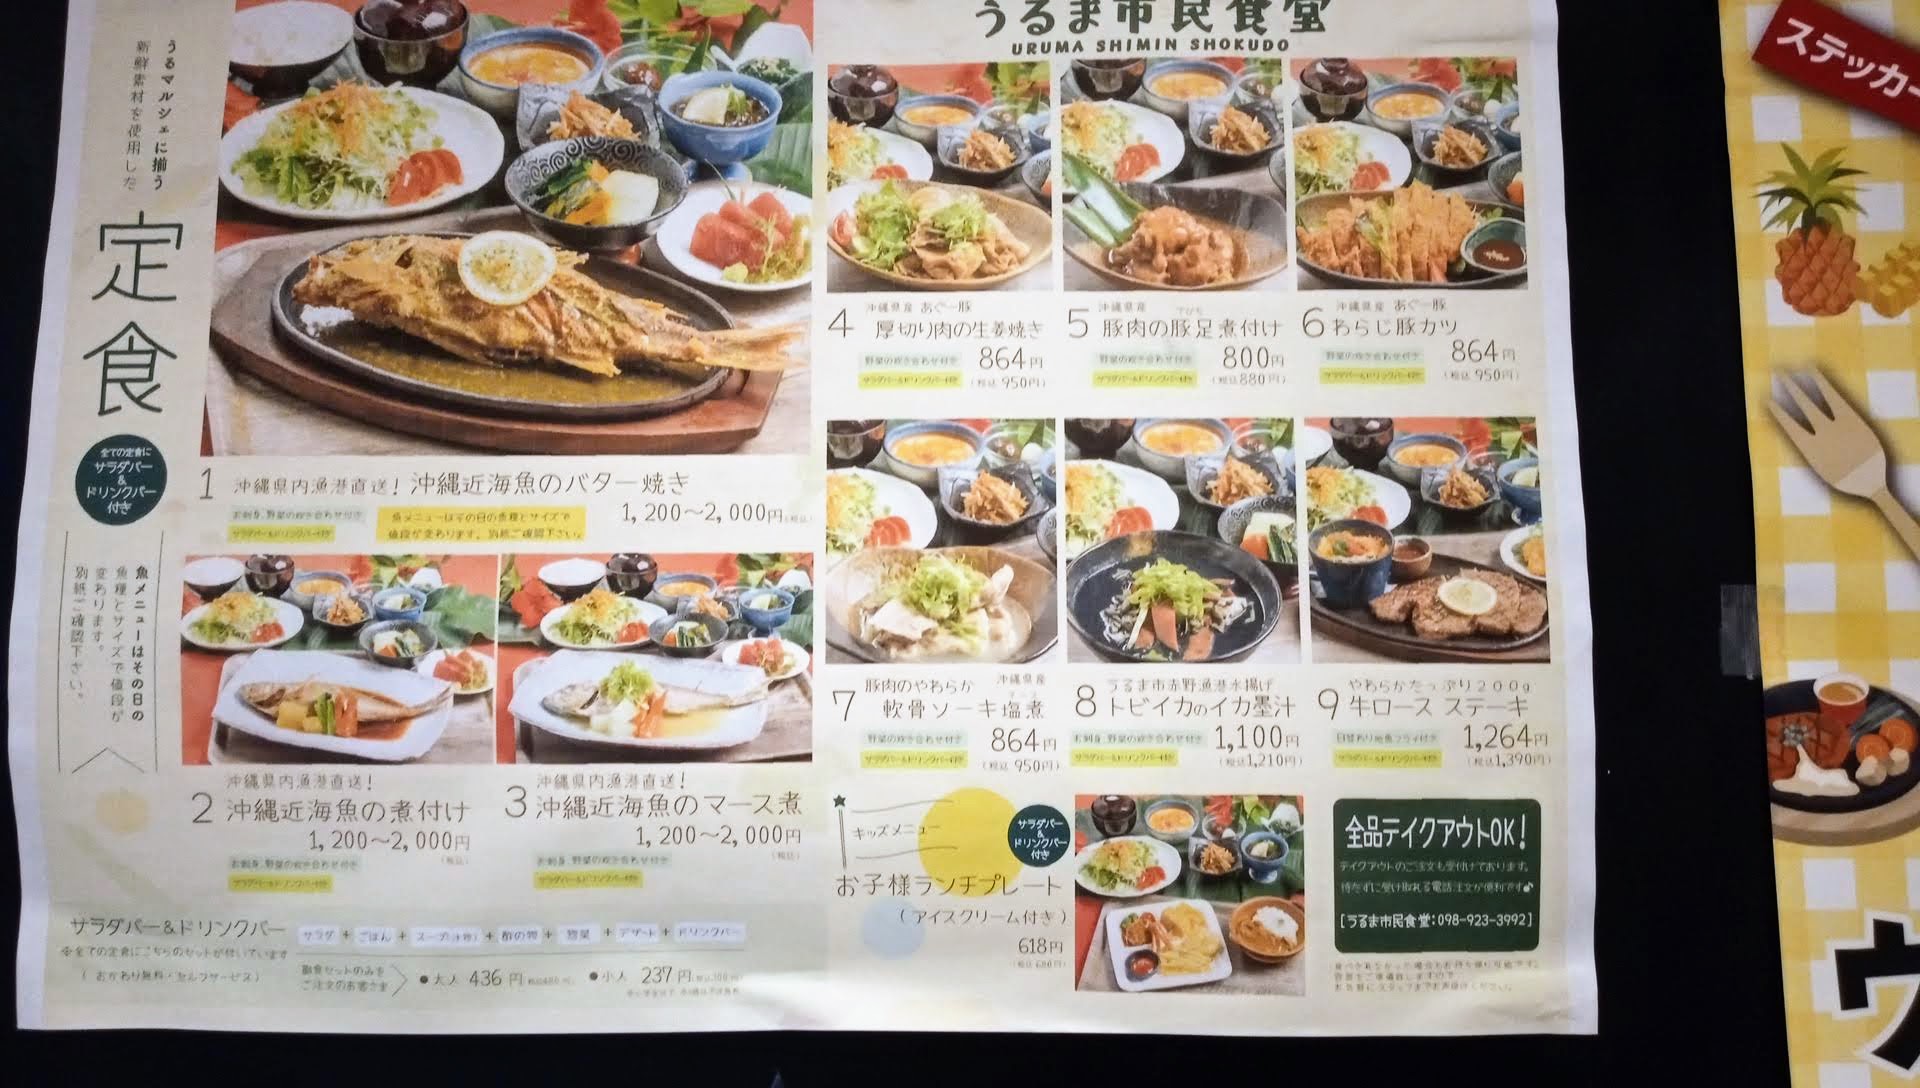 the menu list of Uruma Citizen's Restaurant